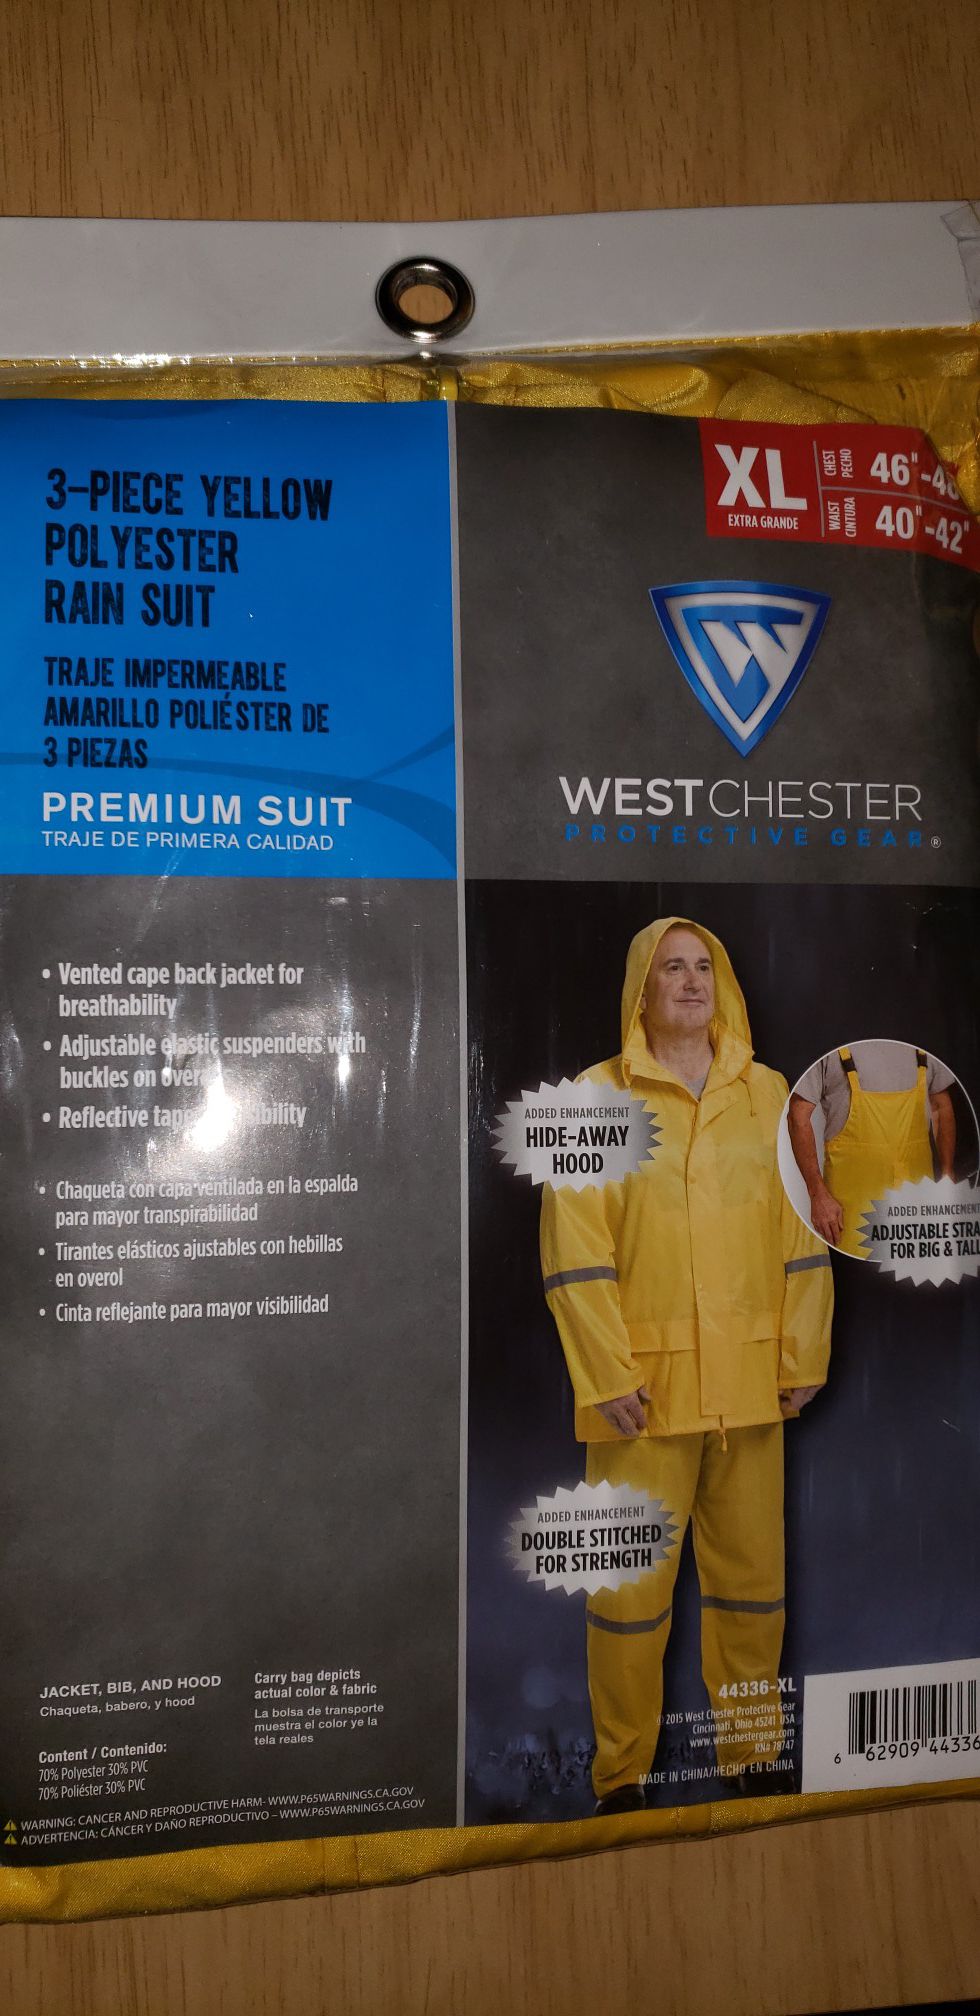 Polyester rain suit